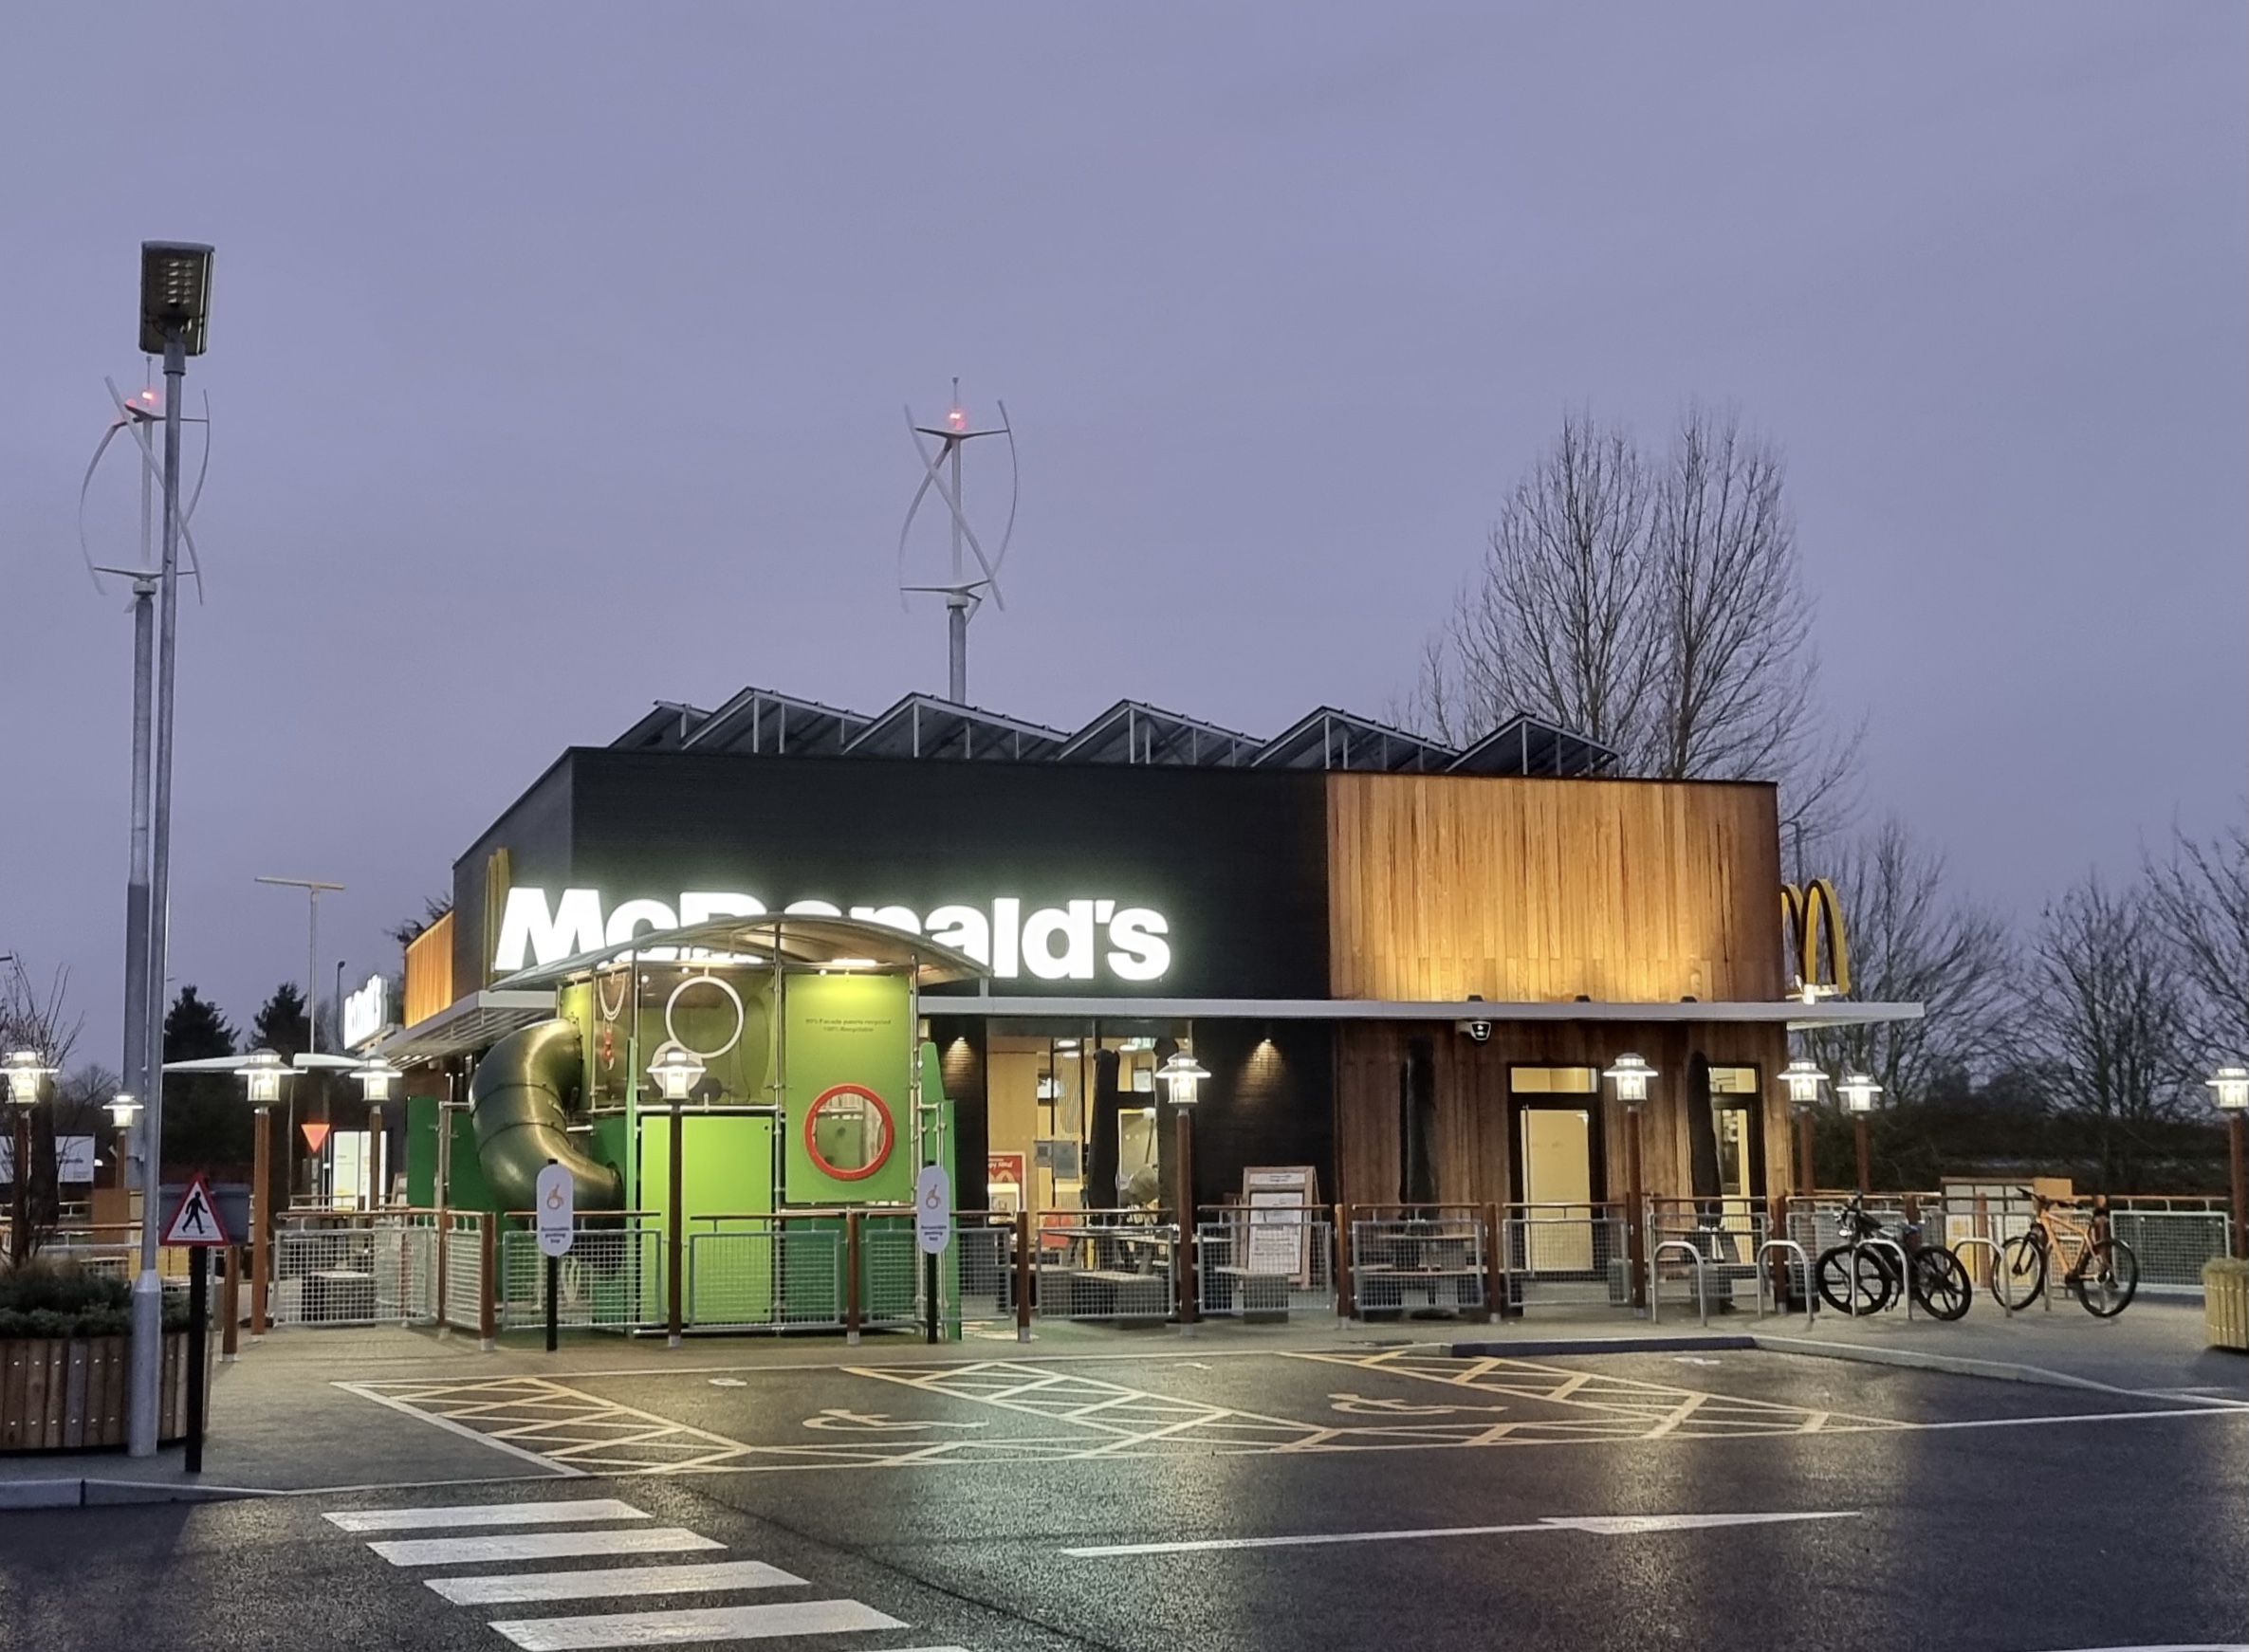 McDonald’s first 'net zero' carbon restaurant in Market Drayton, Shropshire